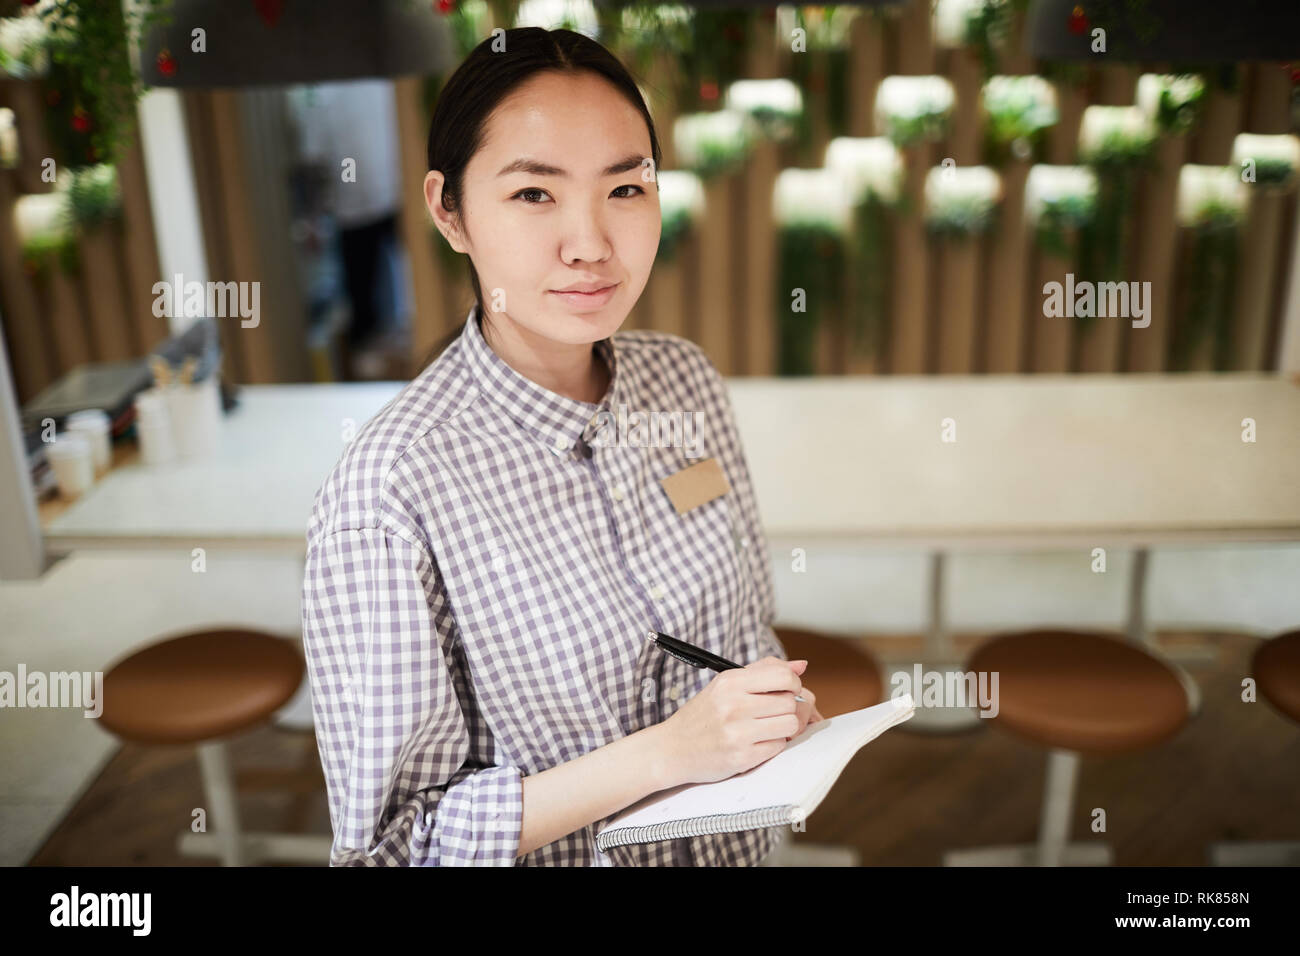 Waitress at work Stock Photo